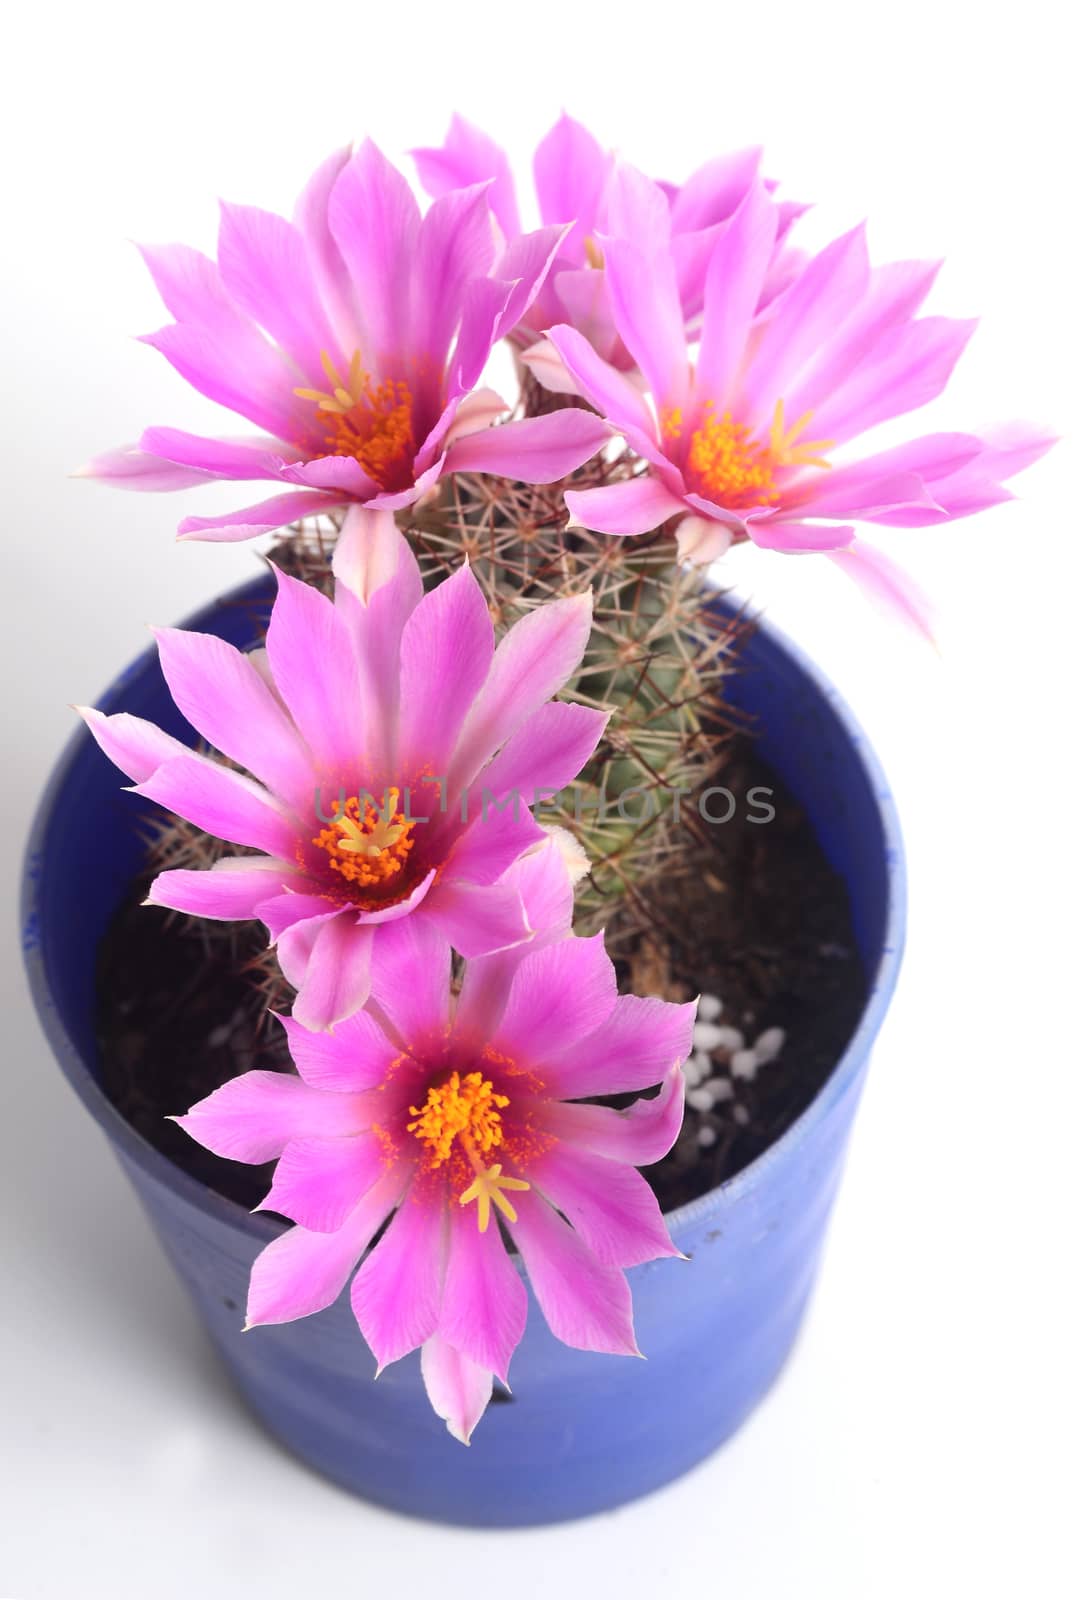 Blooming pink  flower of Mammillaria schumannii  cactus on  white  background